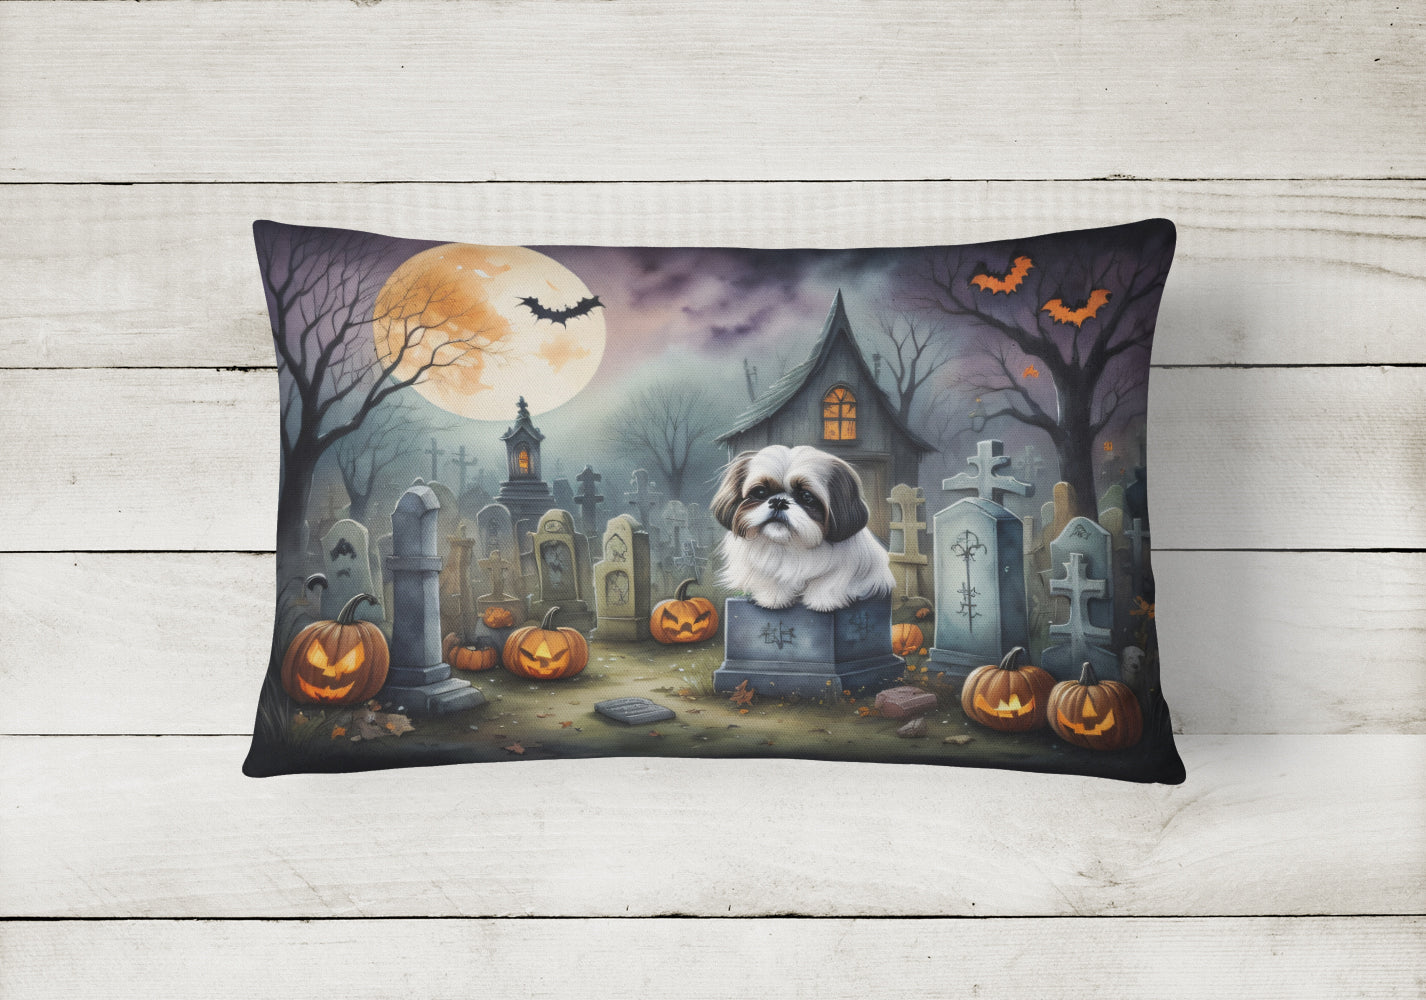 Buy this Shih Tzu Spooky Halloween Fabric Decorative Pillow